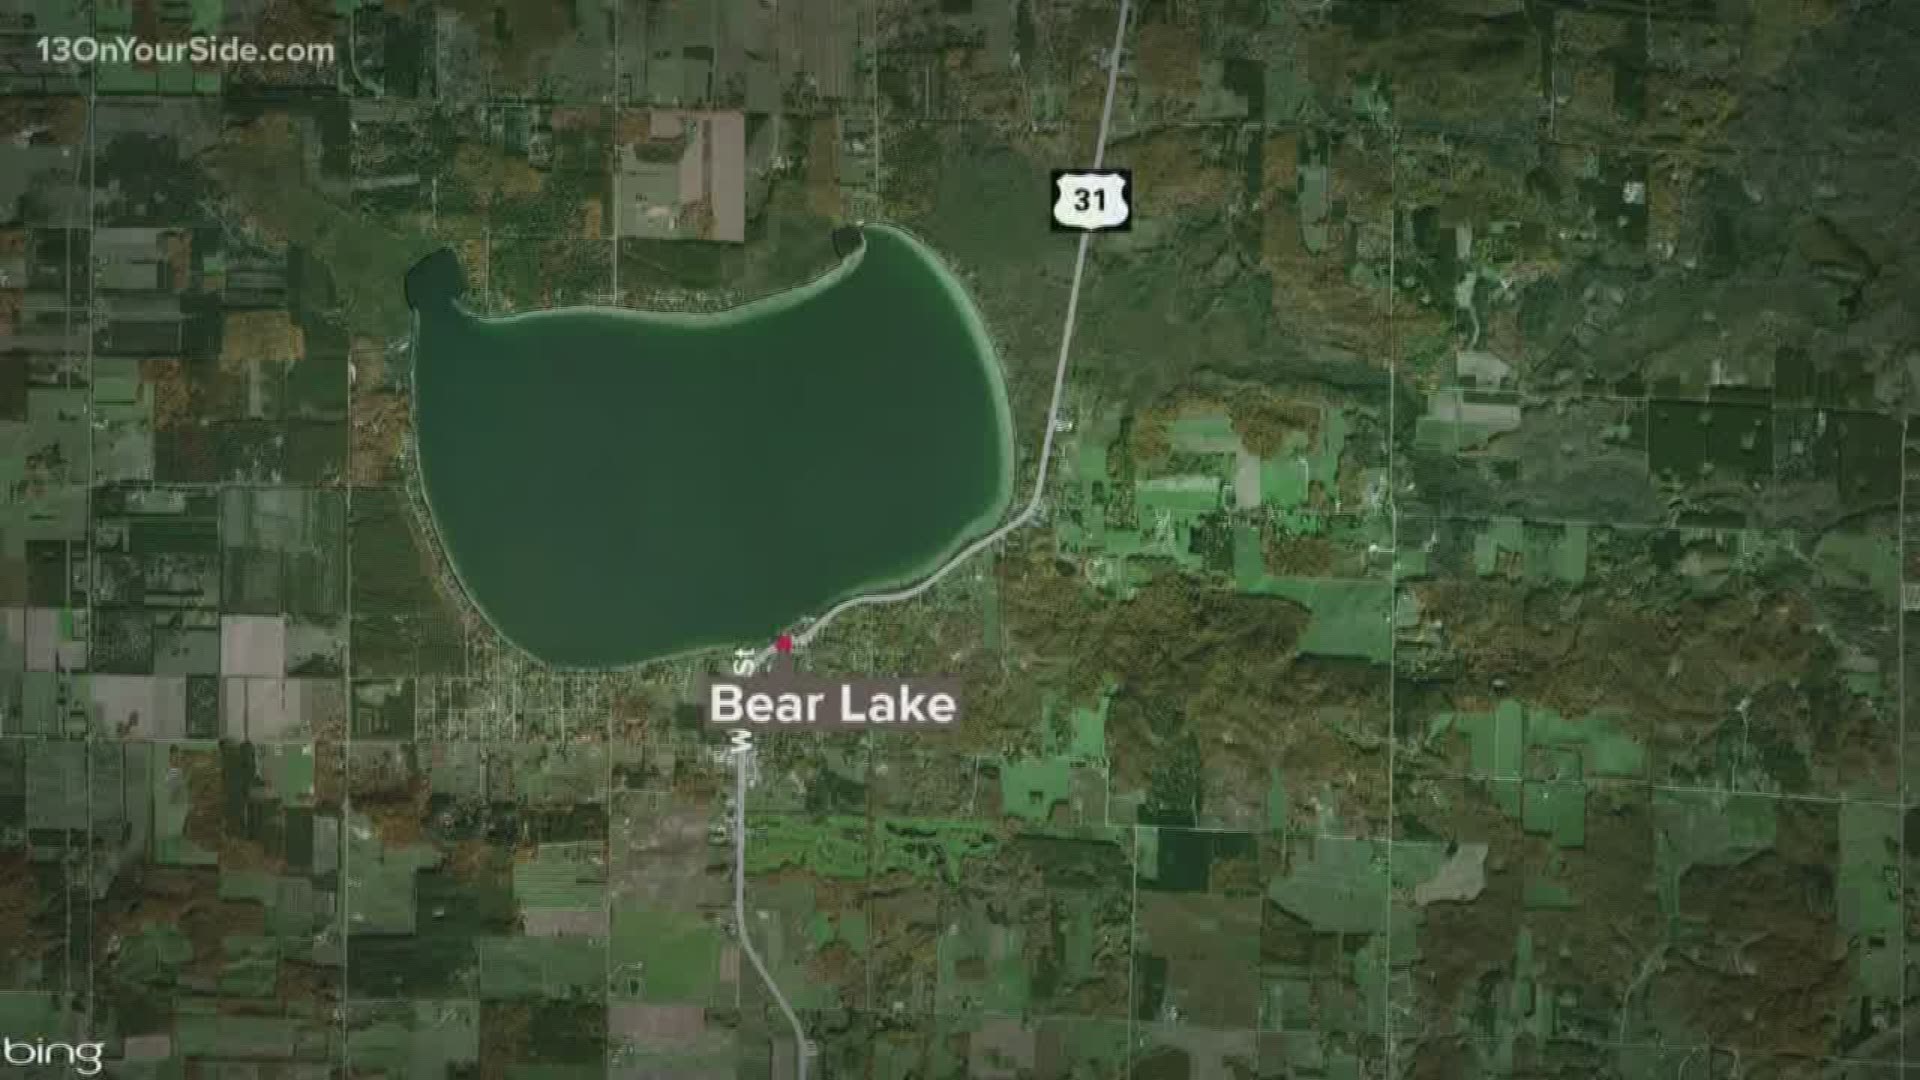 Authorities say she struck Andre Alvesteffer and Damon Williamson with her car Sept. 25 on U.S. 31 in Bear Lake. Alvesteffer later died.